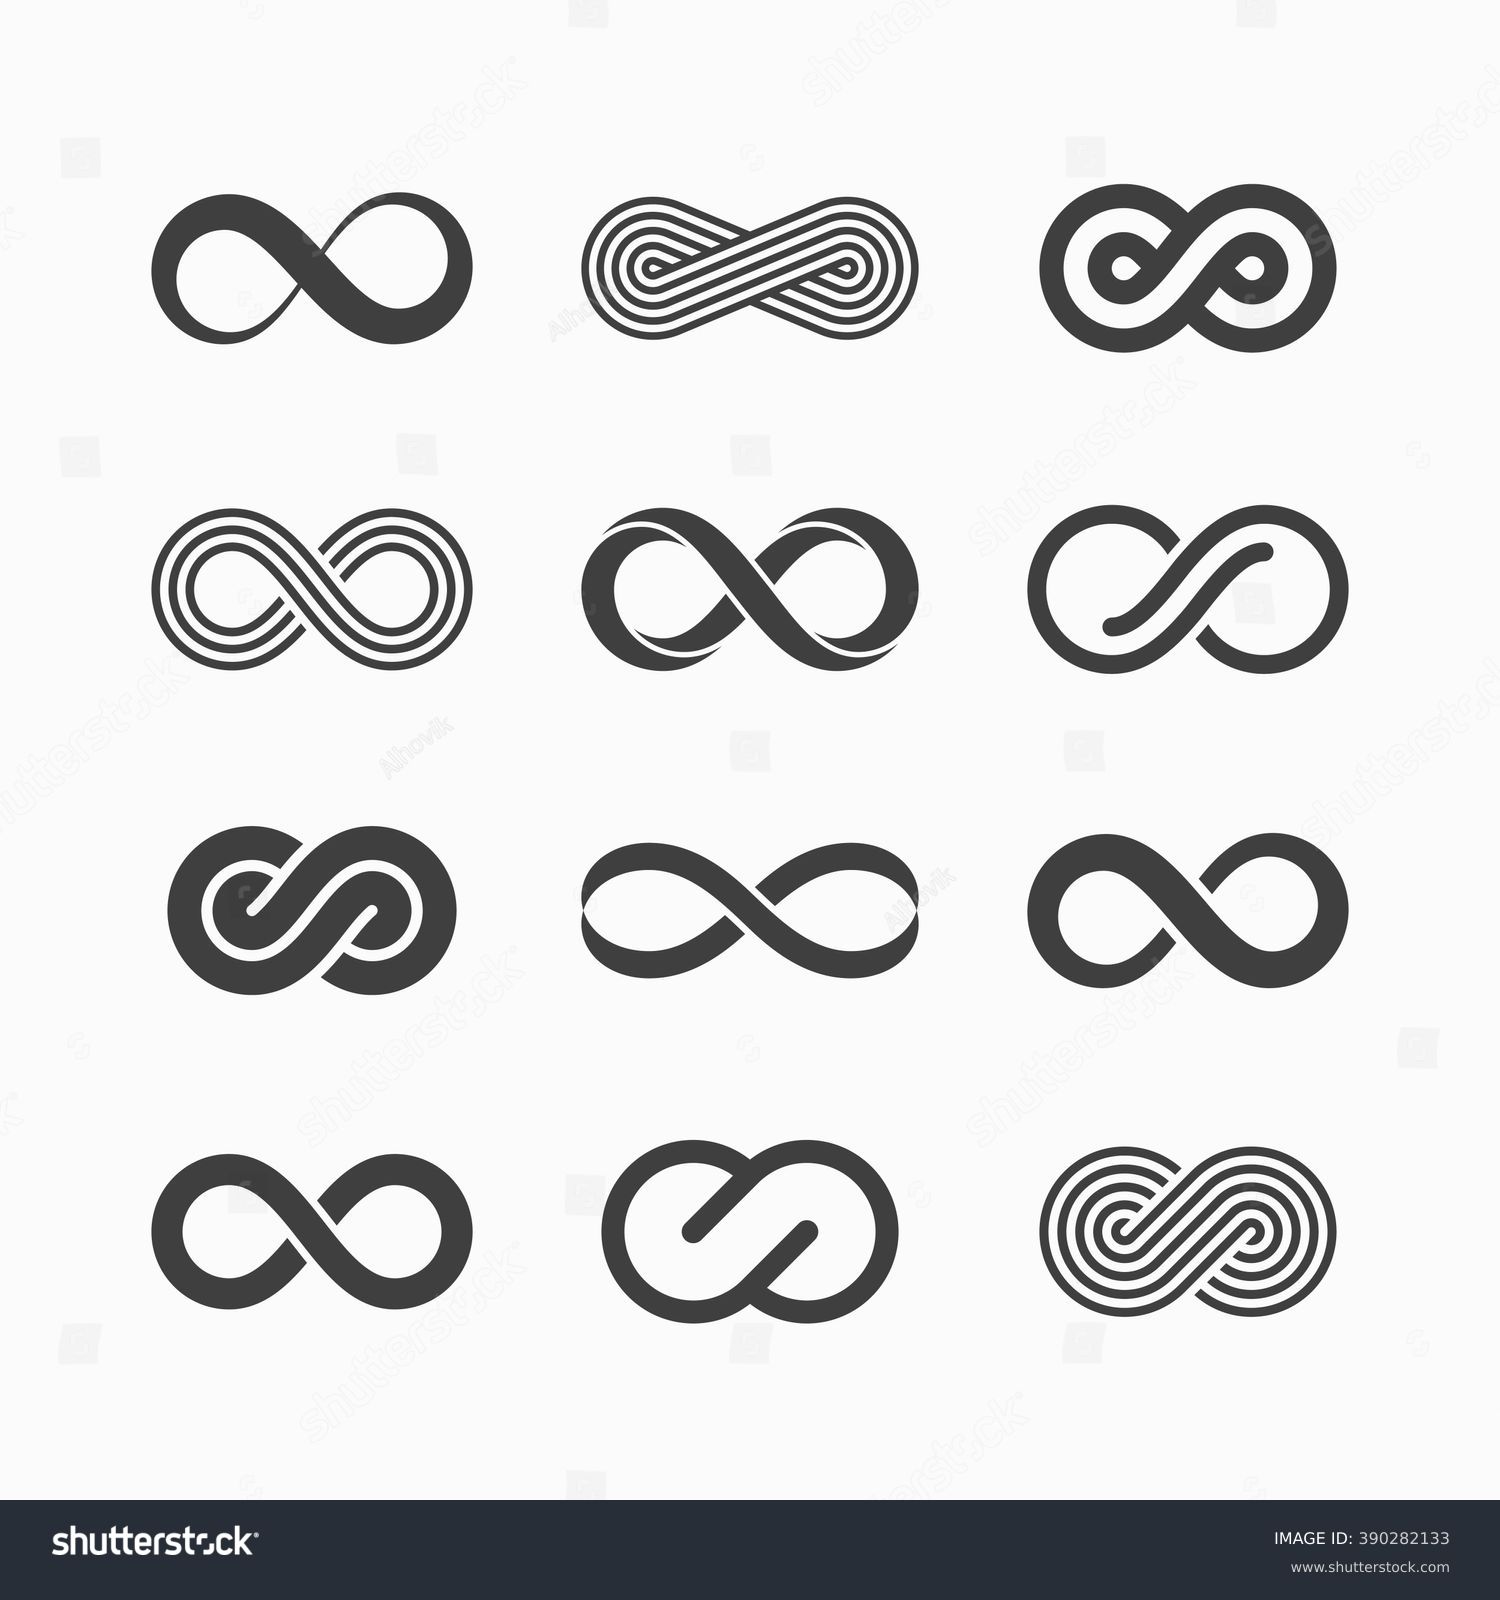 Infinity symbol icons vector illustration #390282133